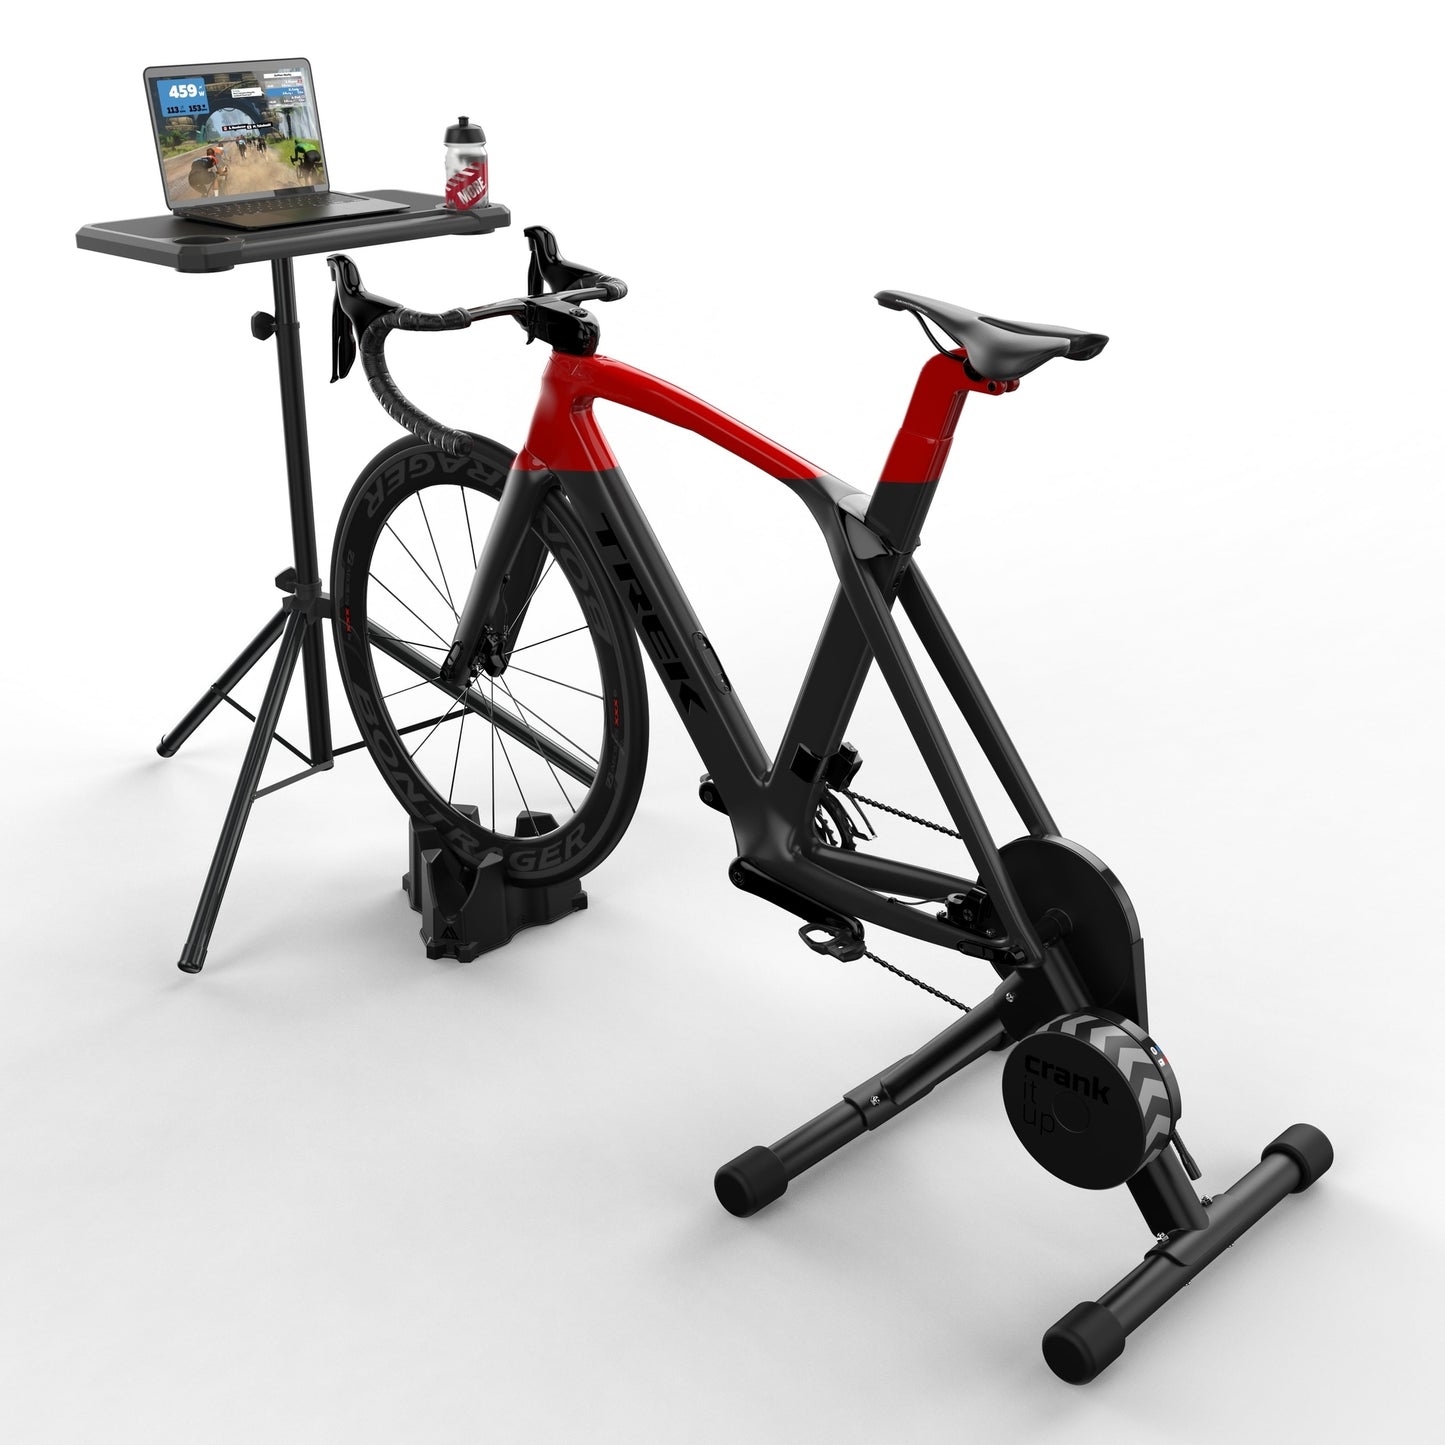 KOM Cycling Media Display Tripod Desk